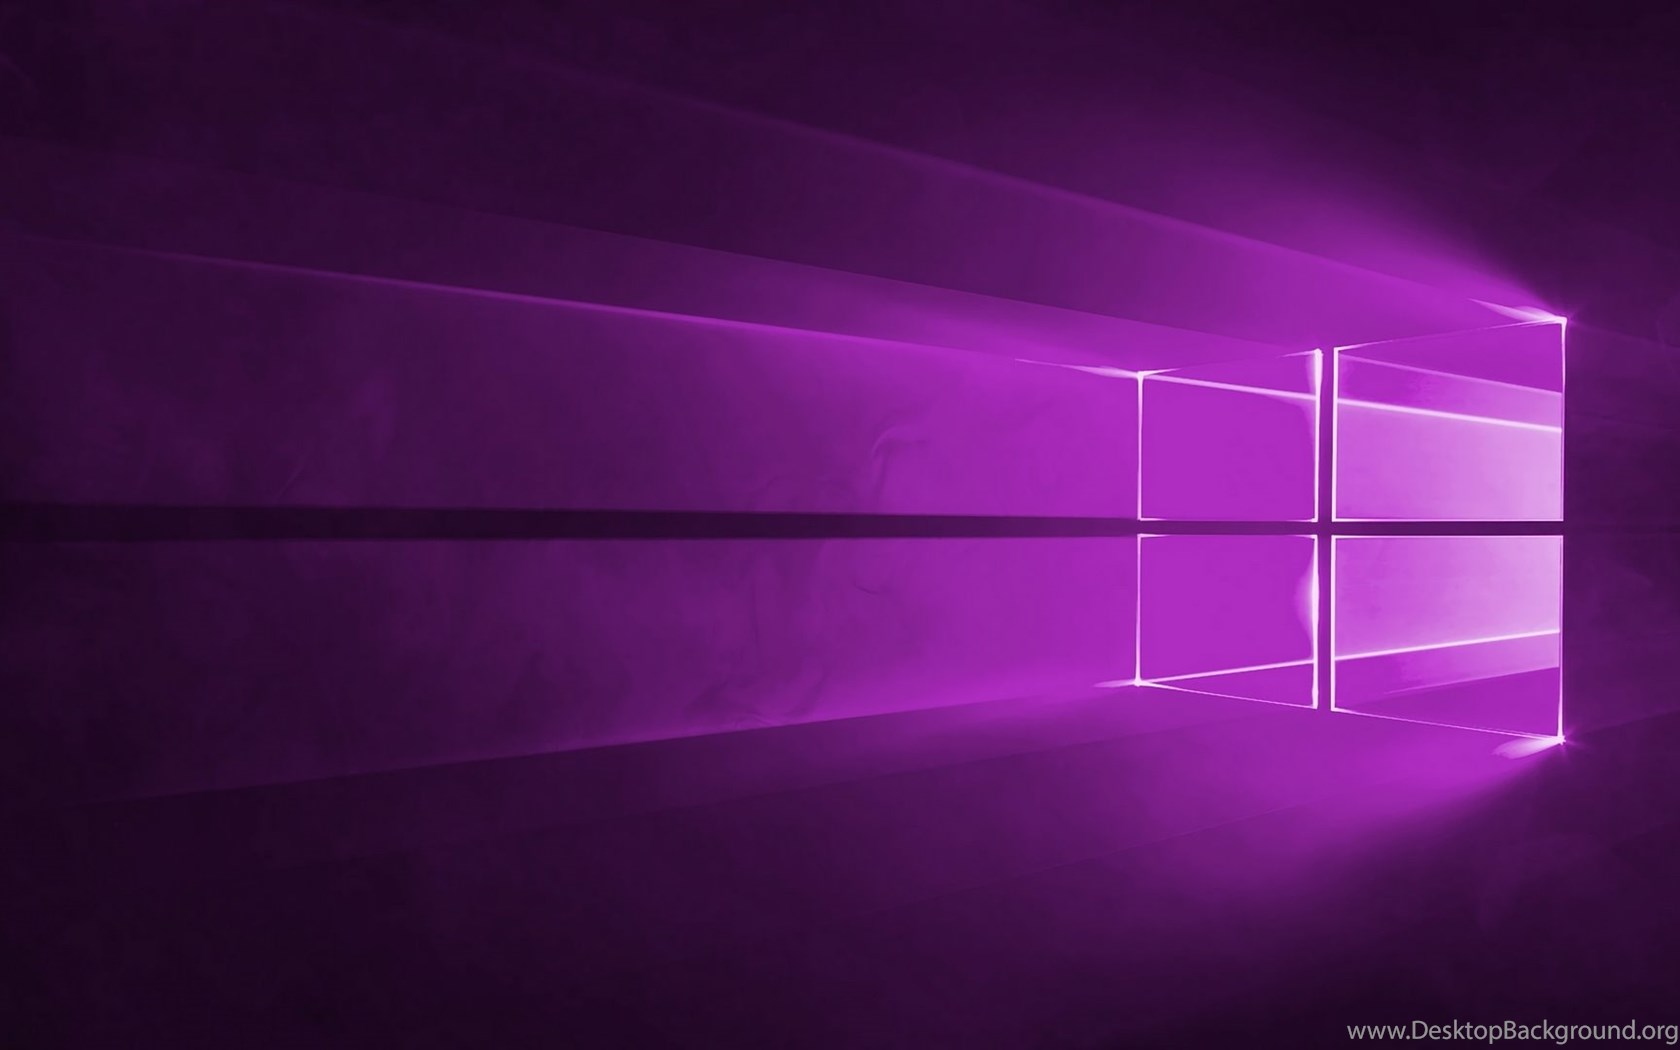 Windows 10 Wallpaper Violet Theme 1920x1080 4527 Desktop Background